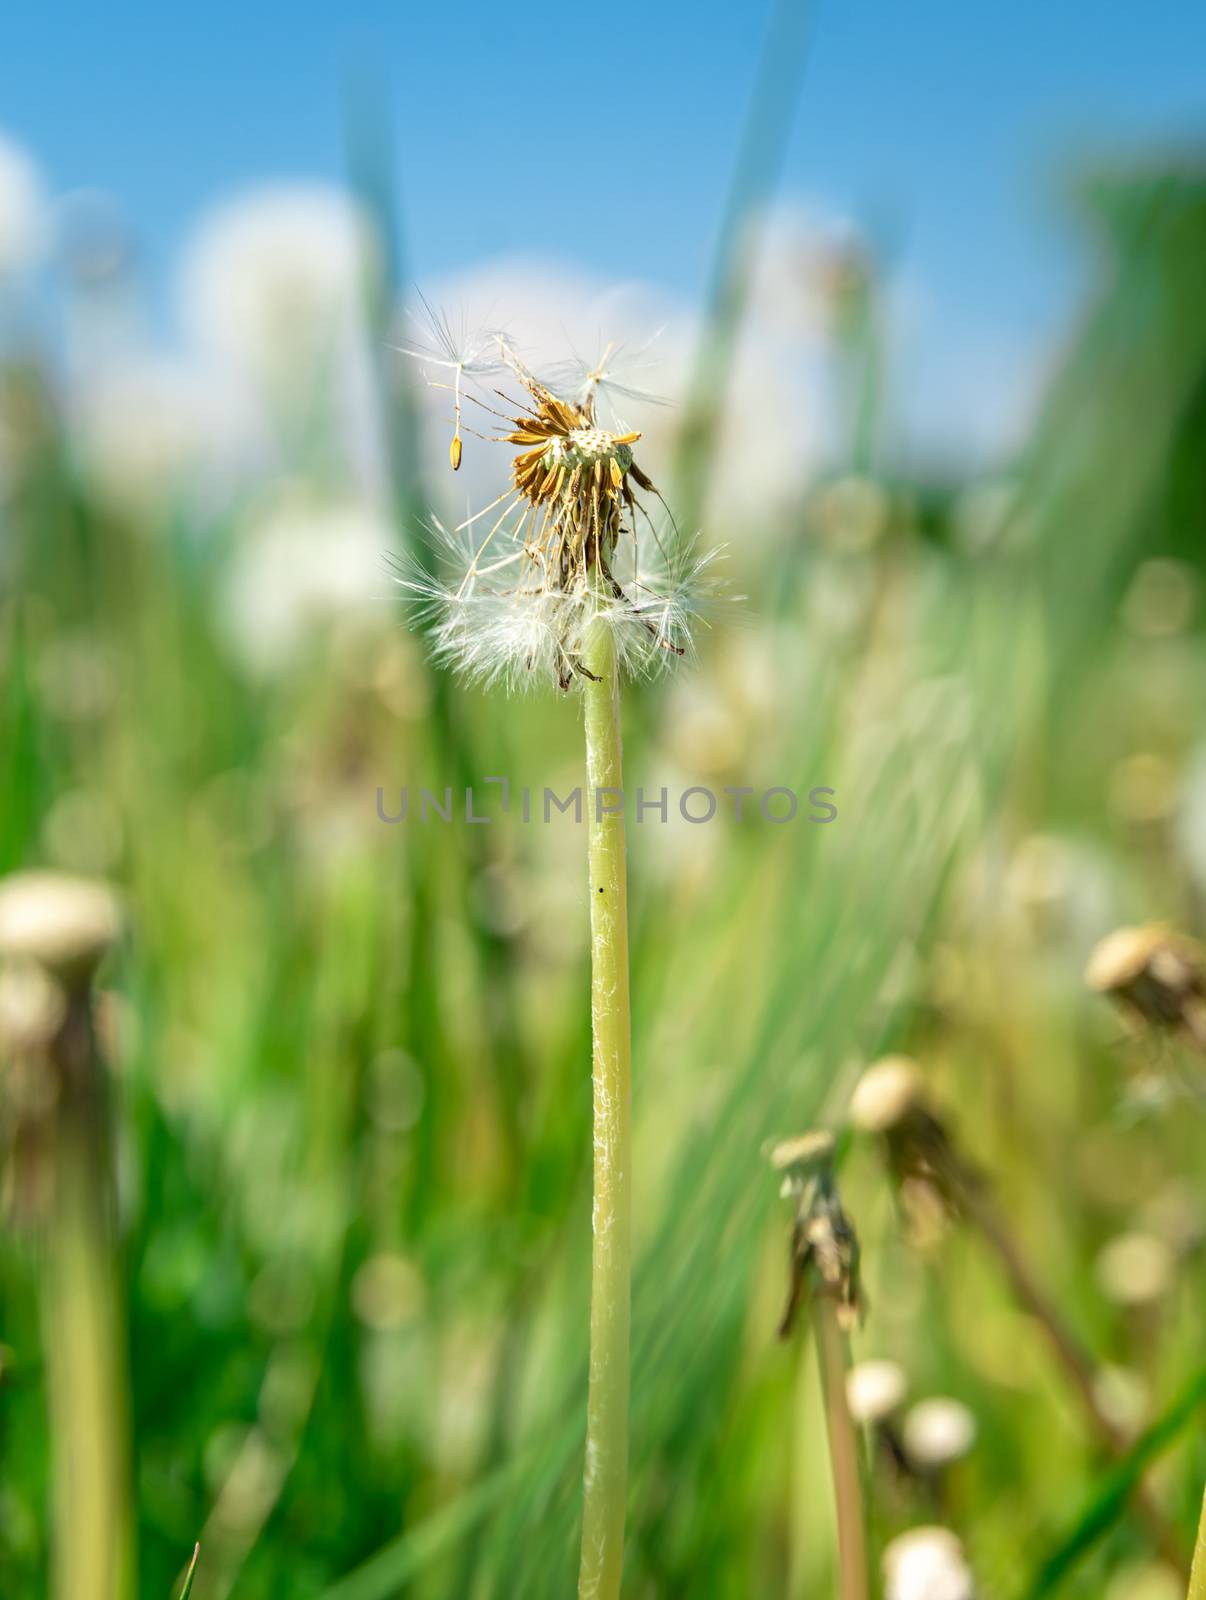 dandelions on a green field in summer time by Edophoto